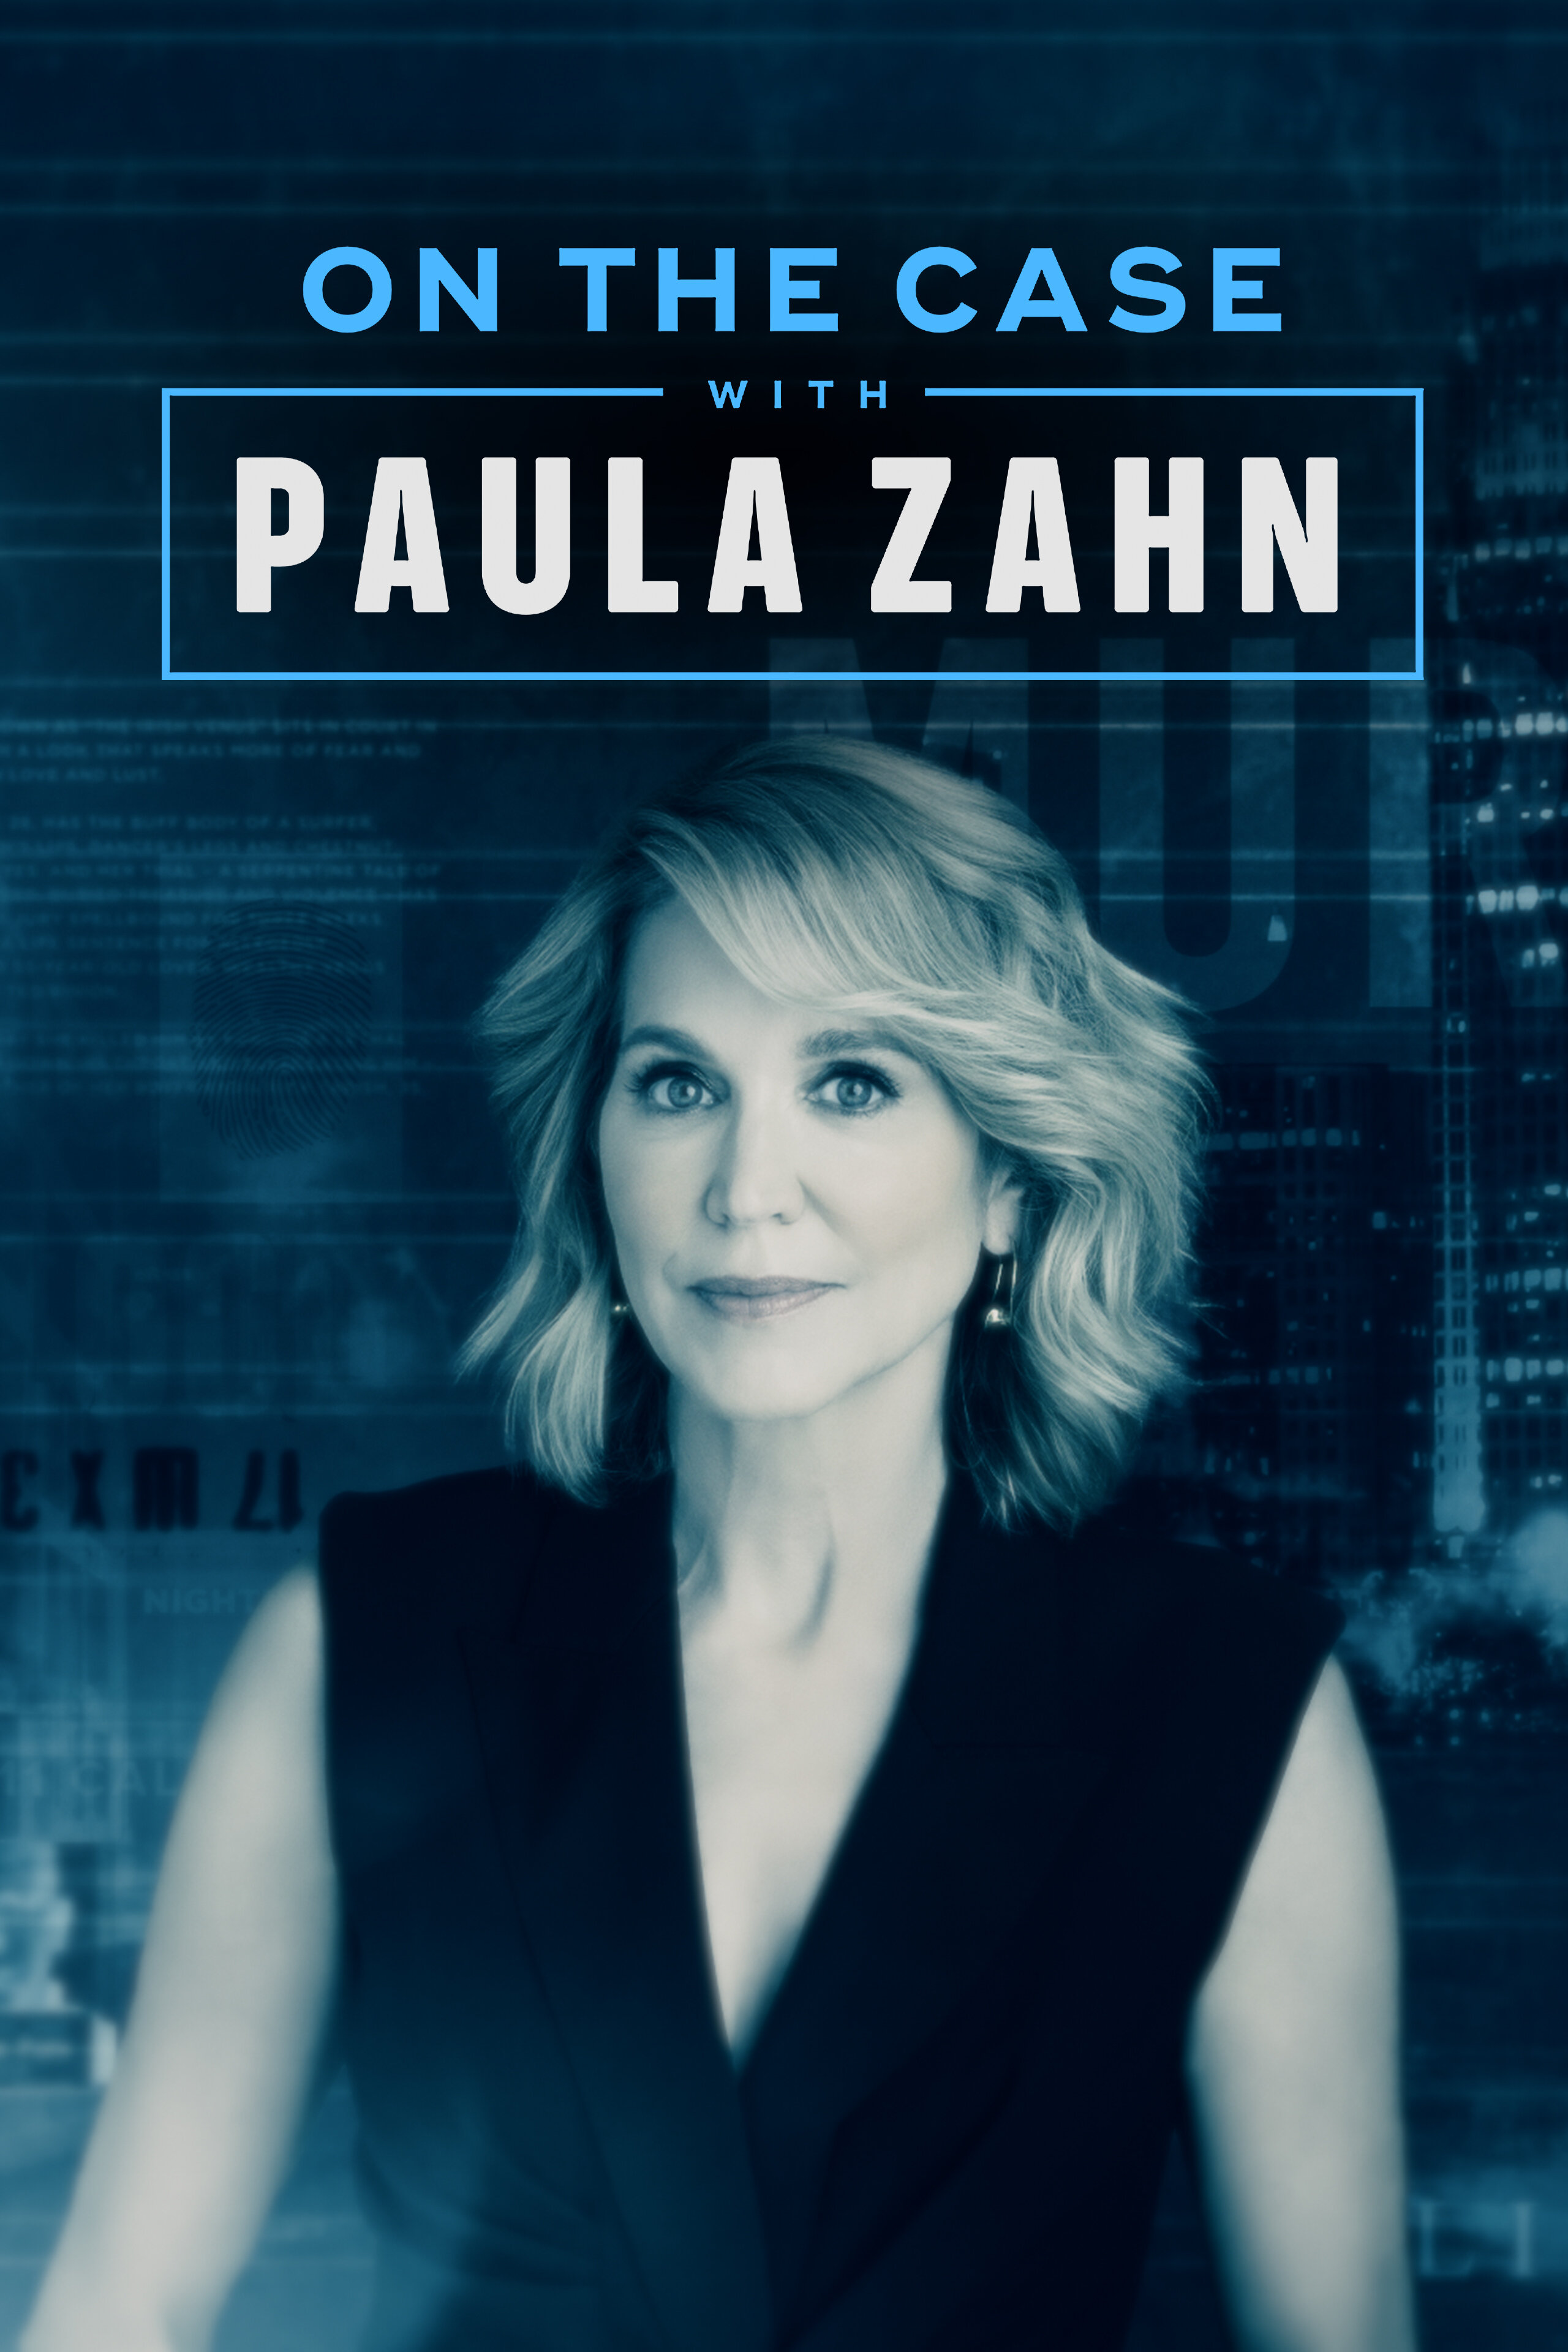 On the Case with Paula Zahn ne zaman